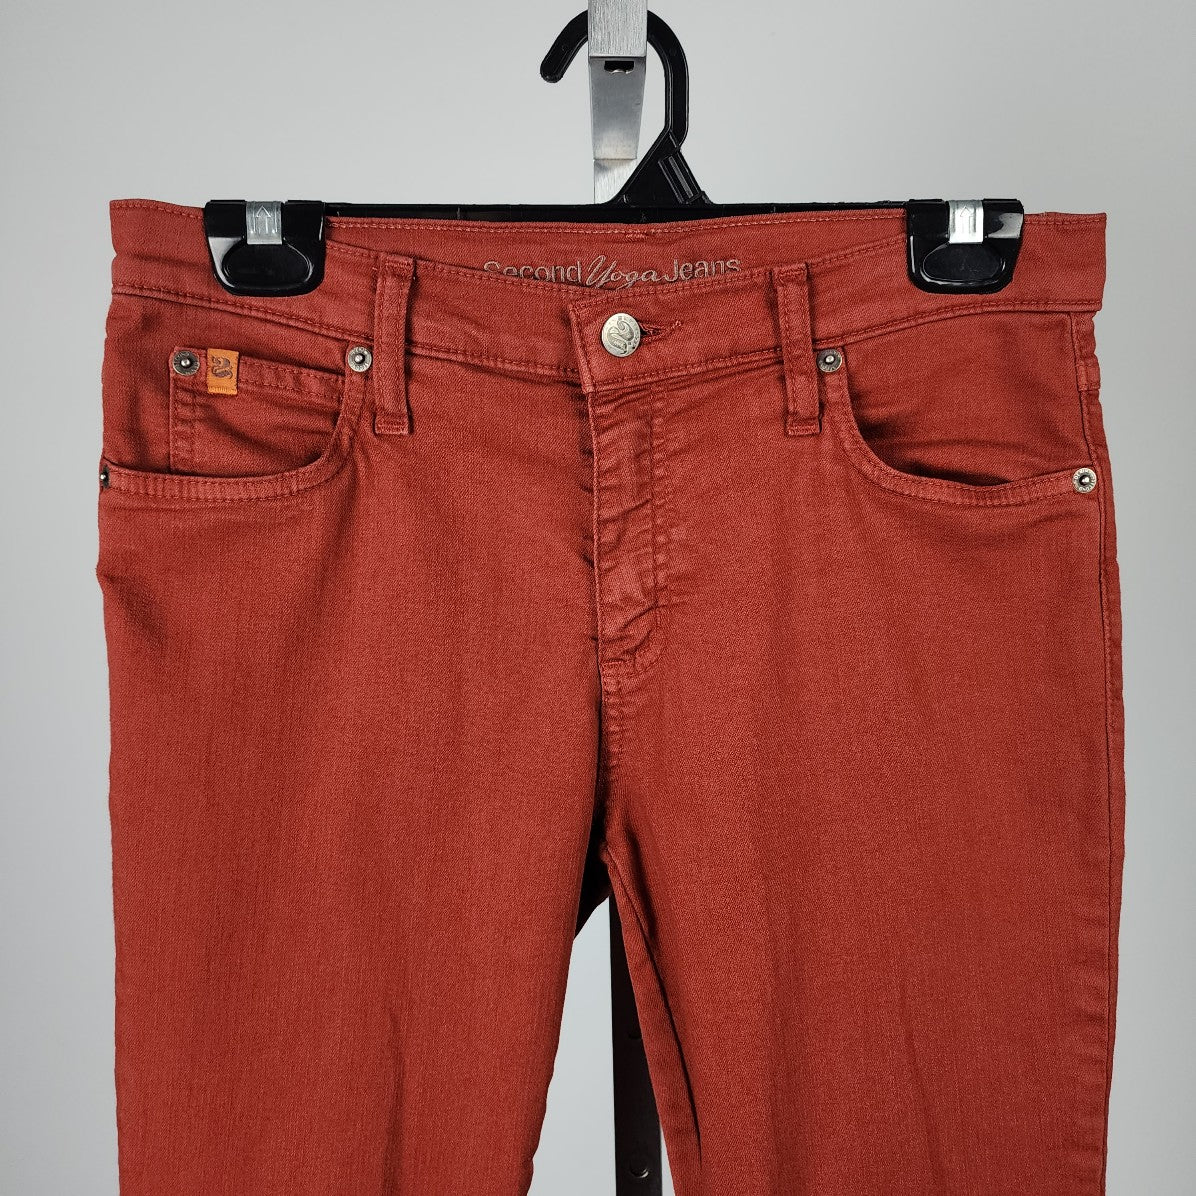 Second Yoga Jeans  Rust Hombre Skinny Cotton Pants Size 28